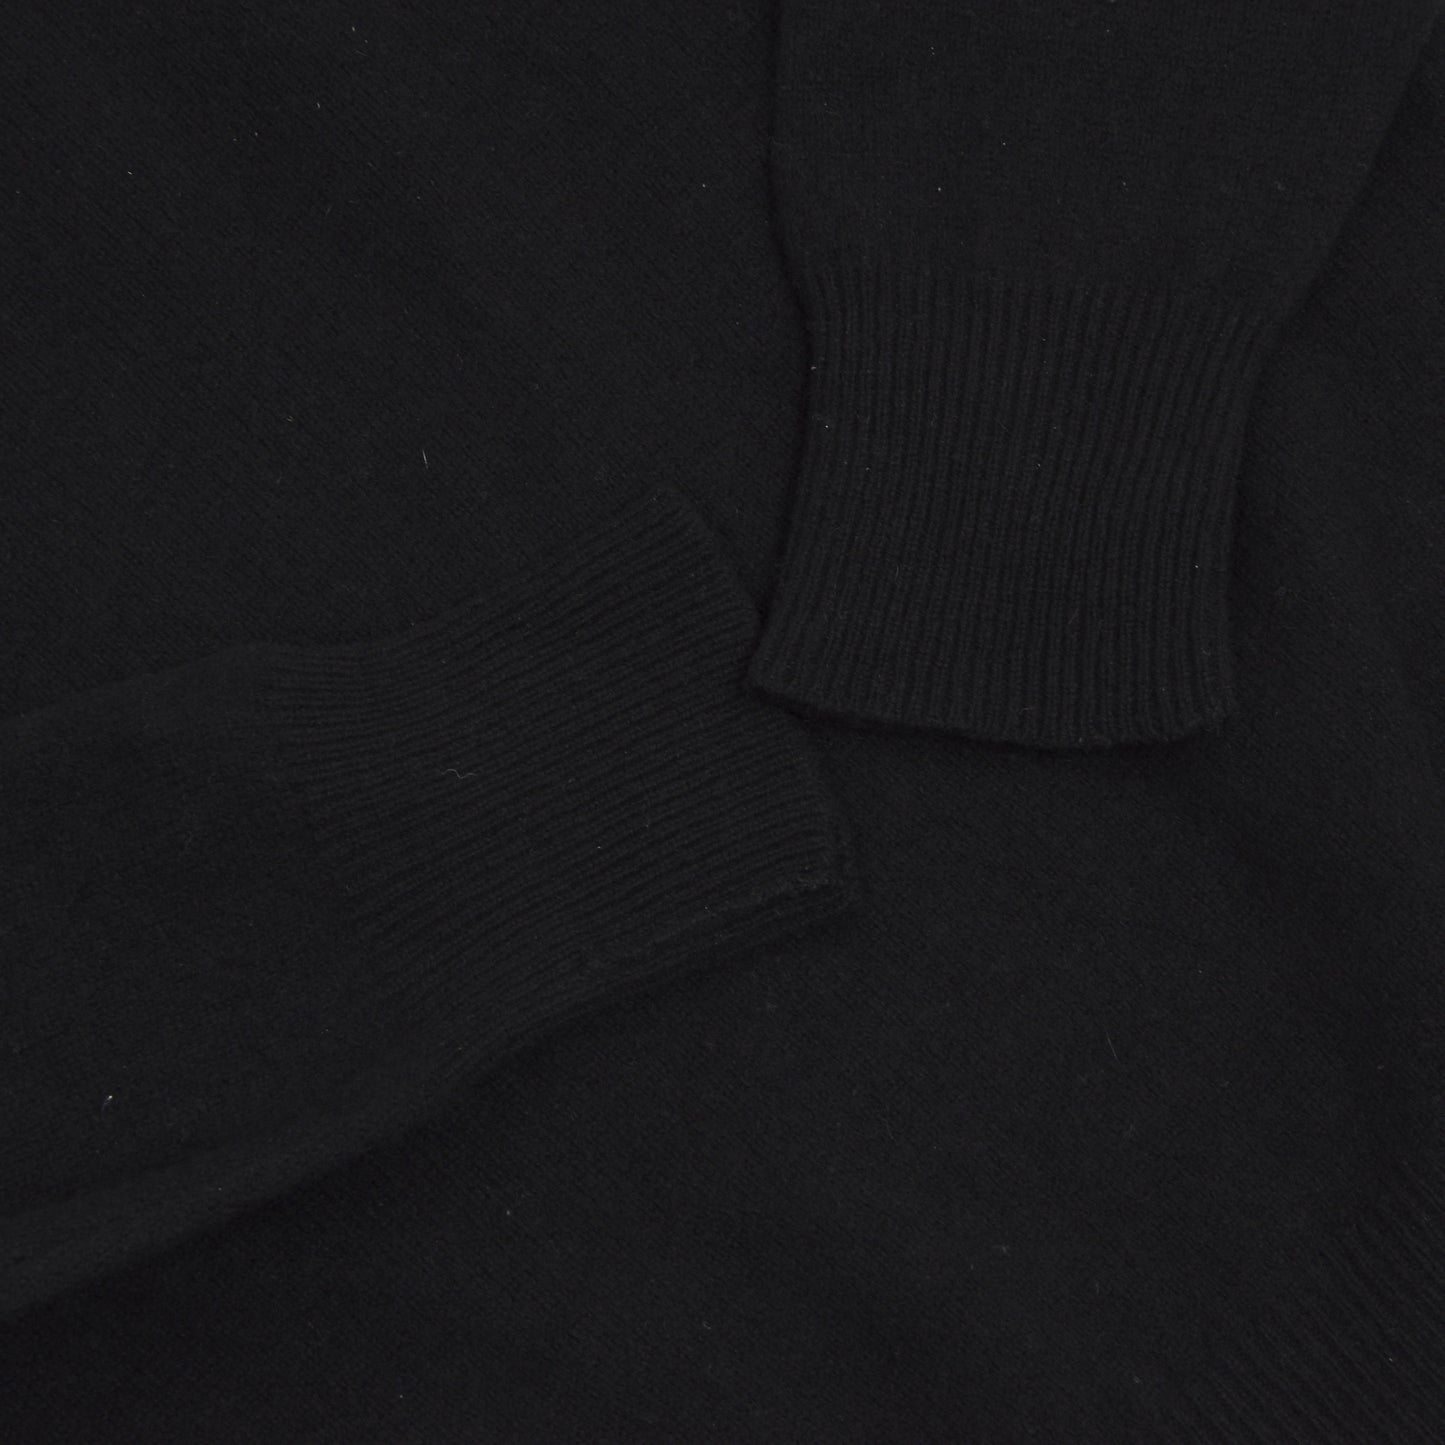 Polo Ralph Lauren Lambswool Sweater Size L - Black